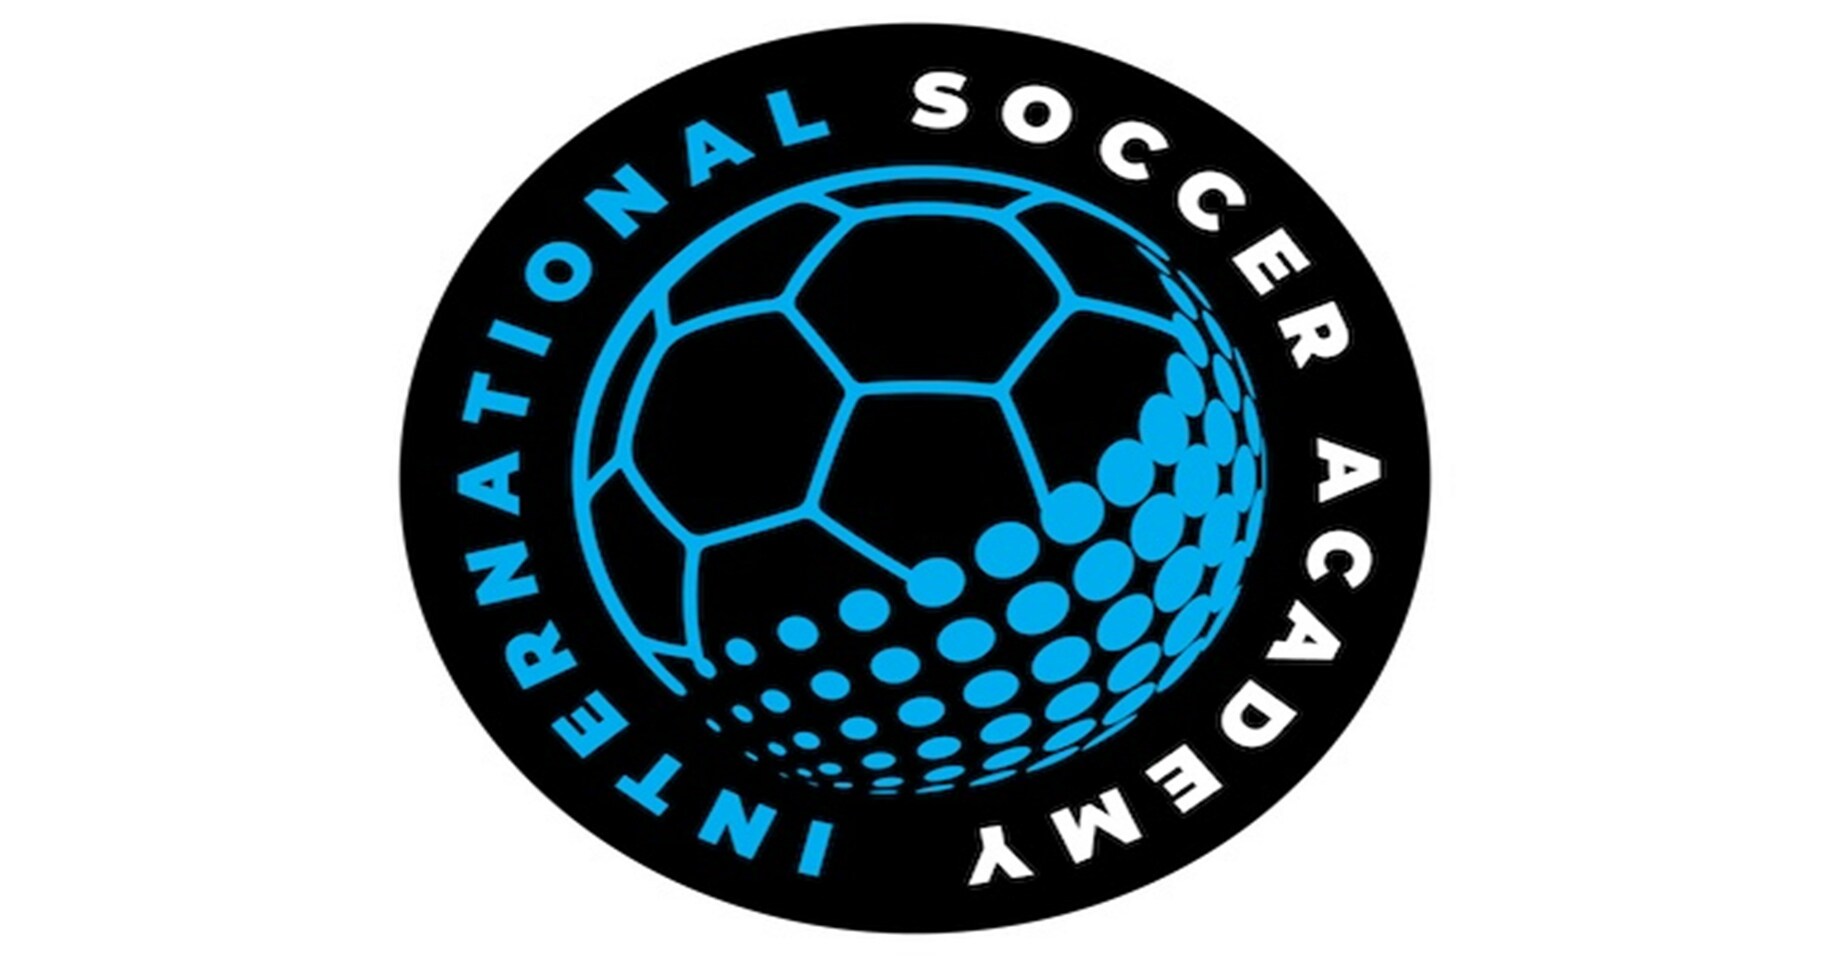 Liga Regional de Futbol Alto Uruguay